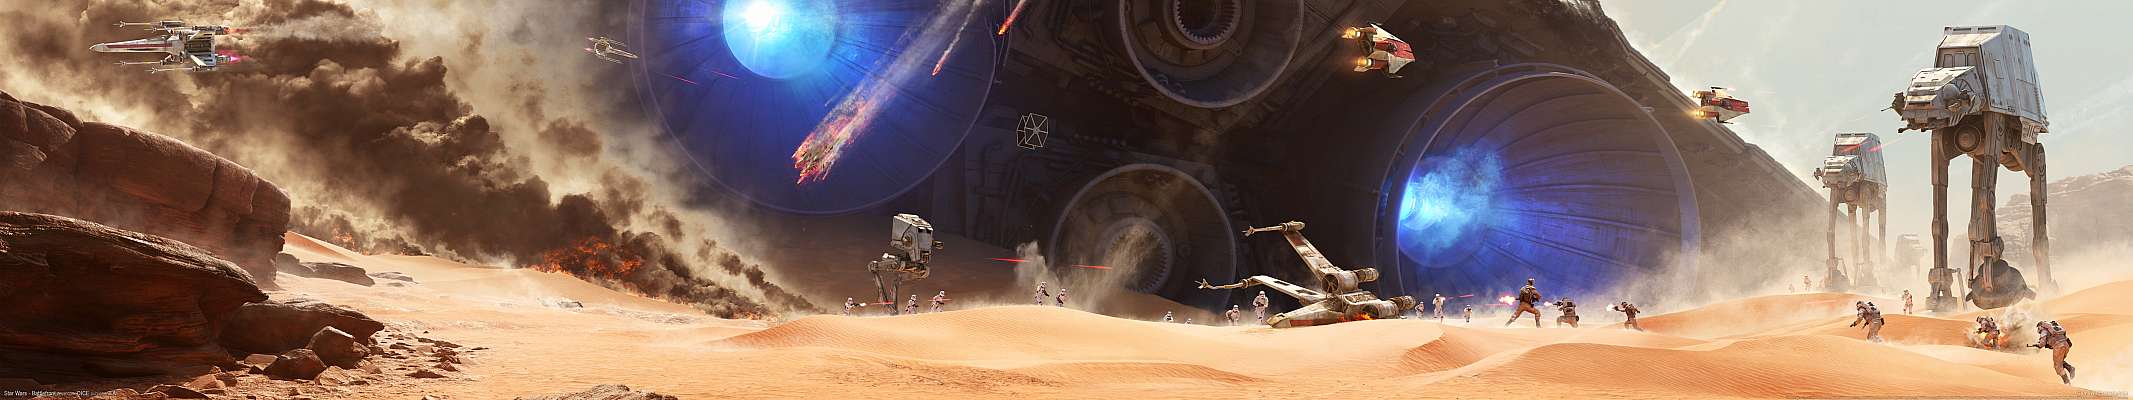 Star Wars - Battlefront triple screen fond d'écran